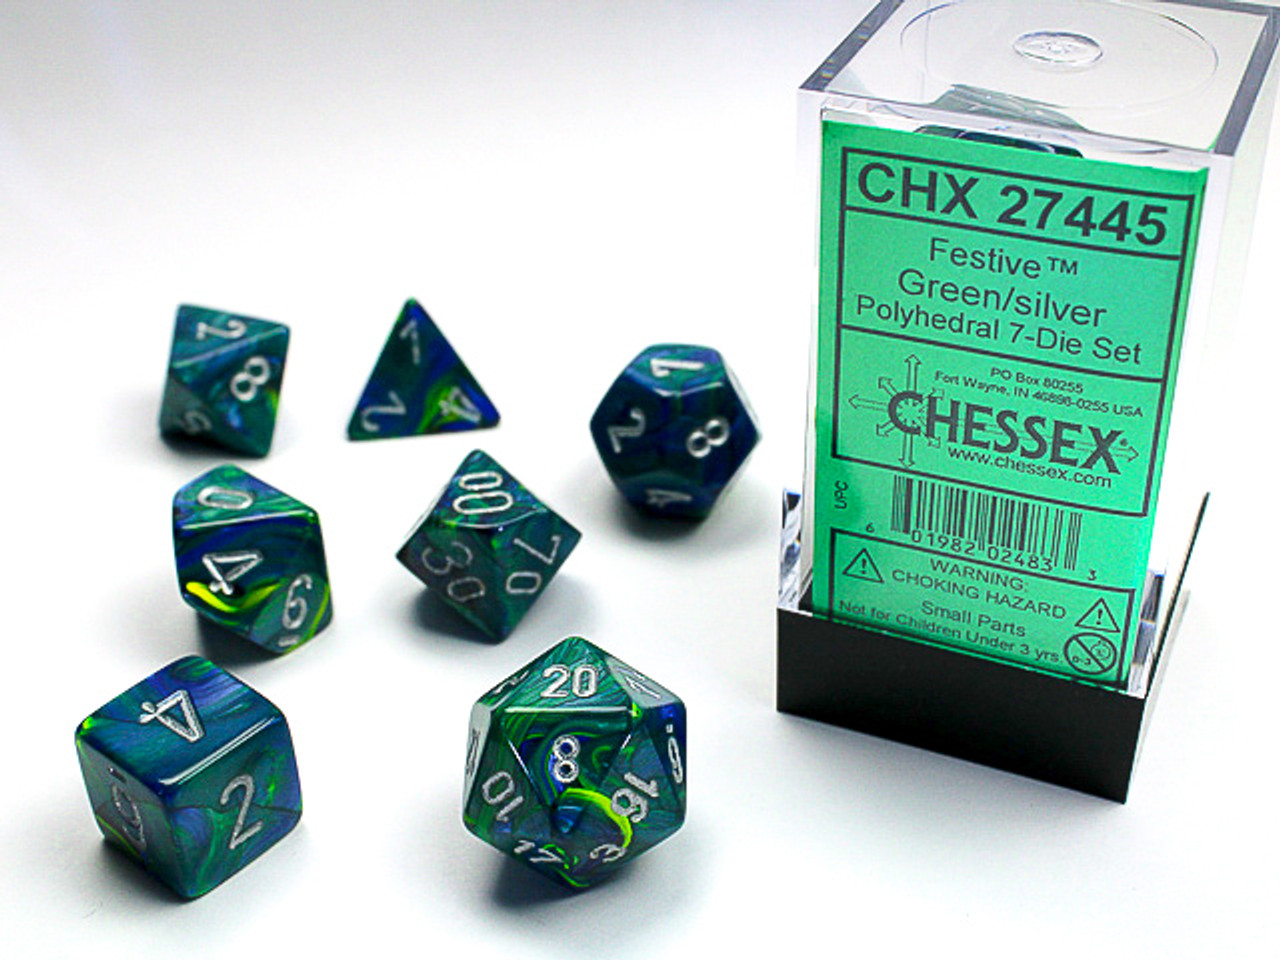 27445 - Festive® Polyhedral Green/silver 7-Die Set